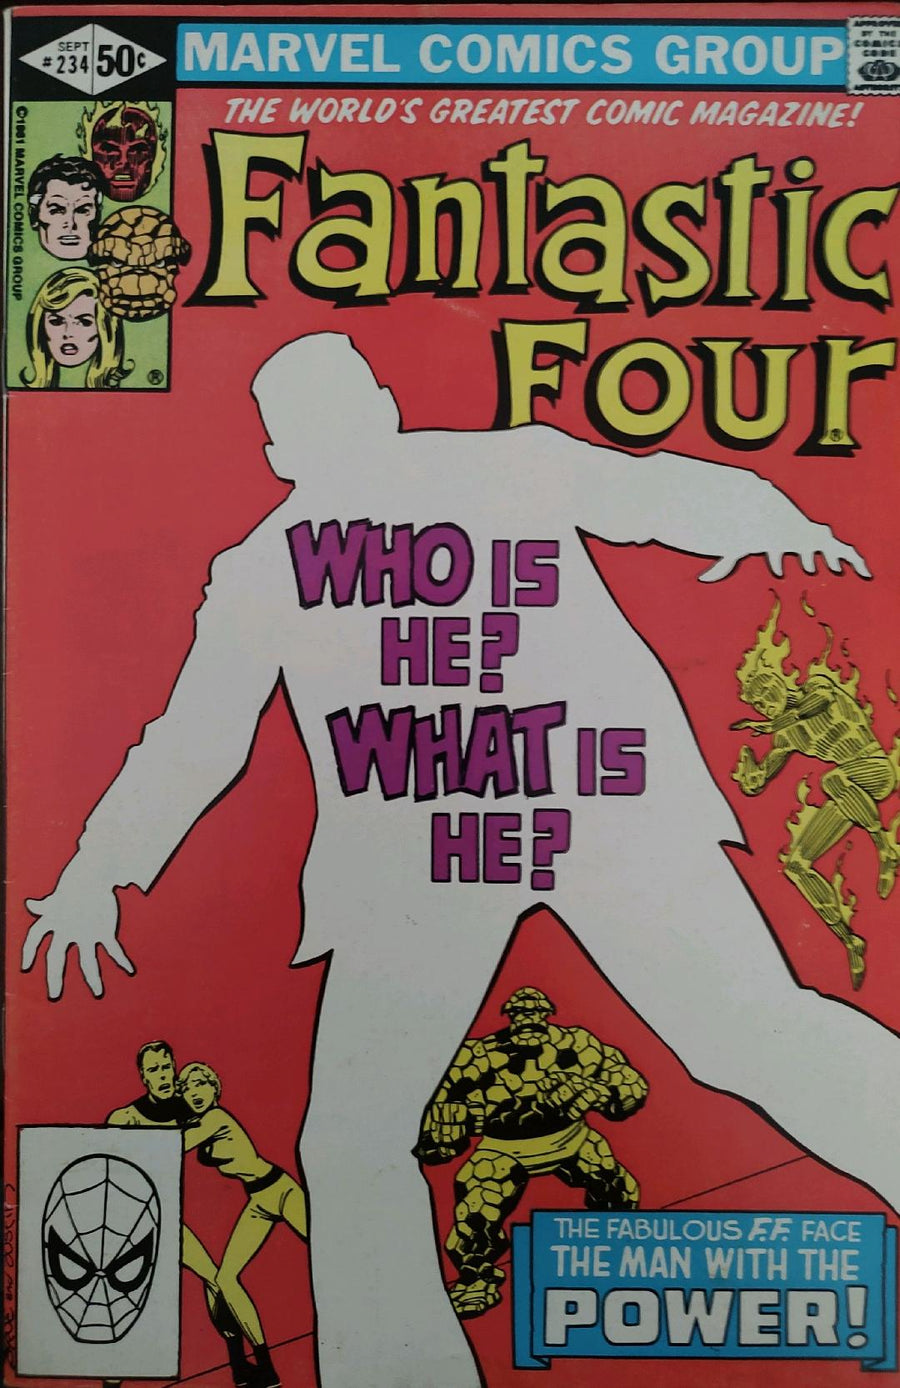 Fantastic Four #234 Comic Book Cover